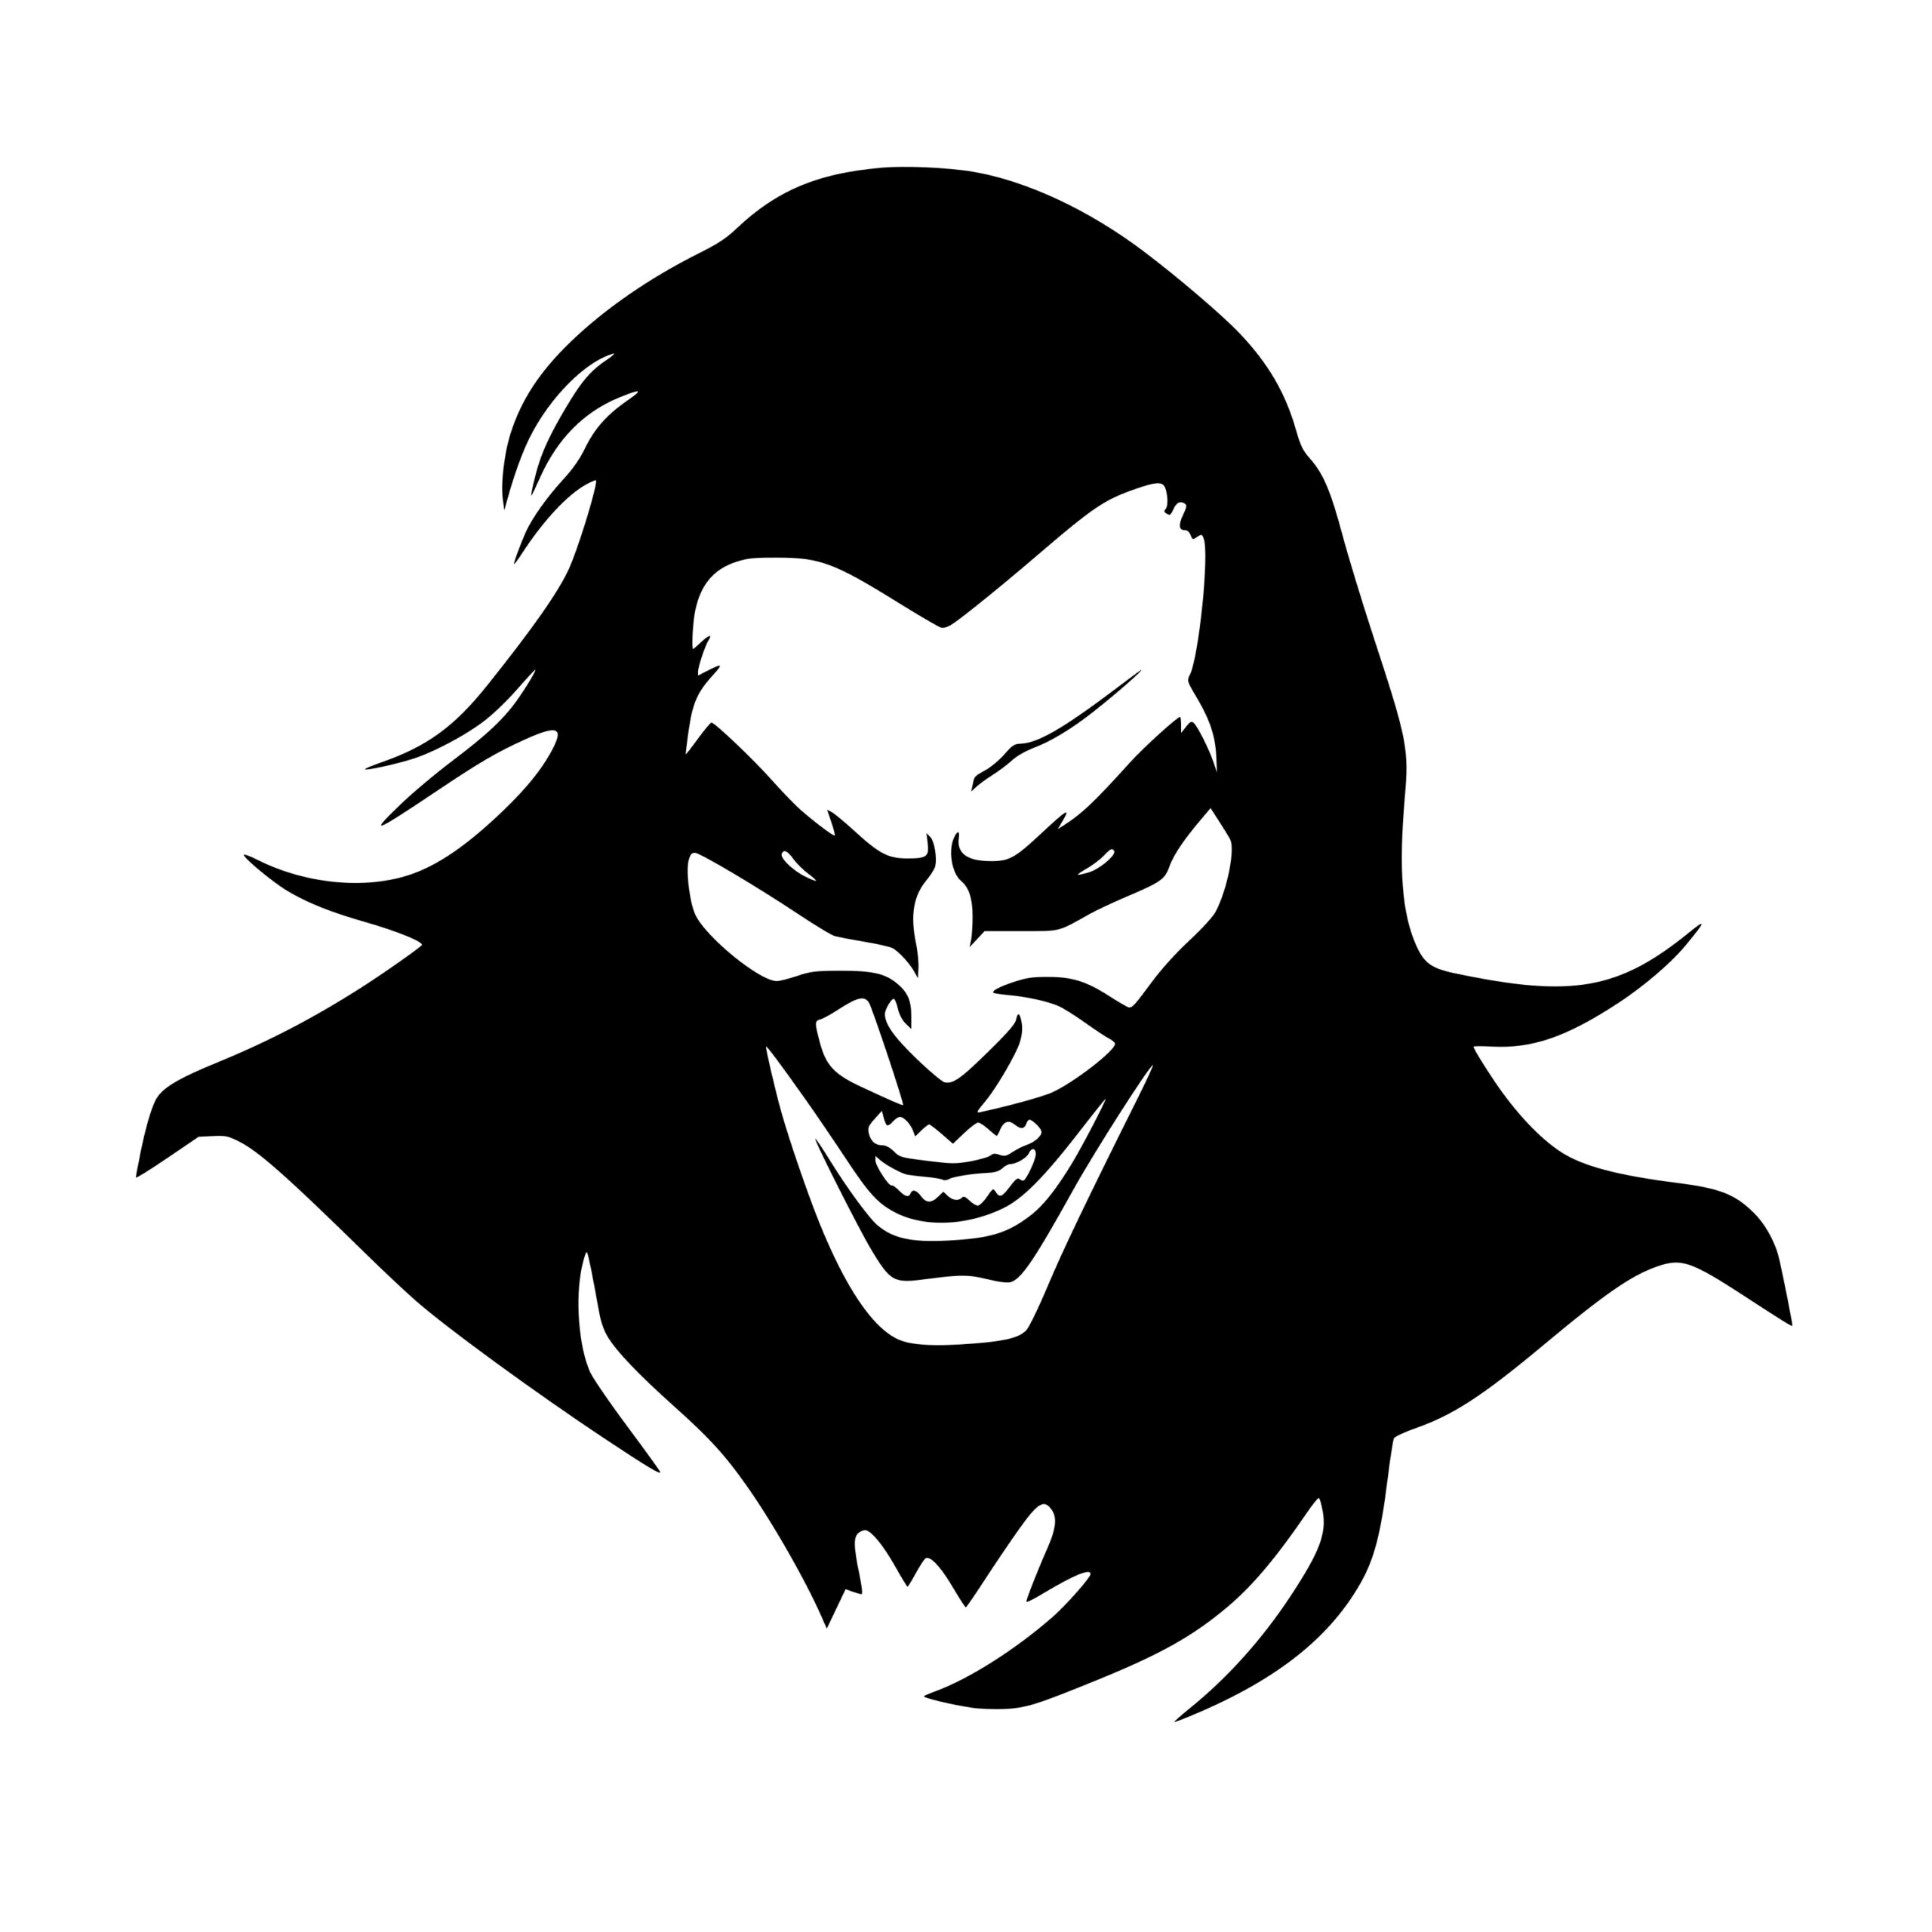 Sinister Vampire SVG Image for Cricut, Silhouette, Laser Machines